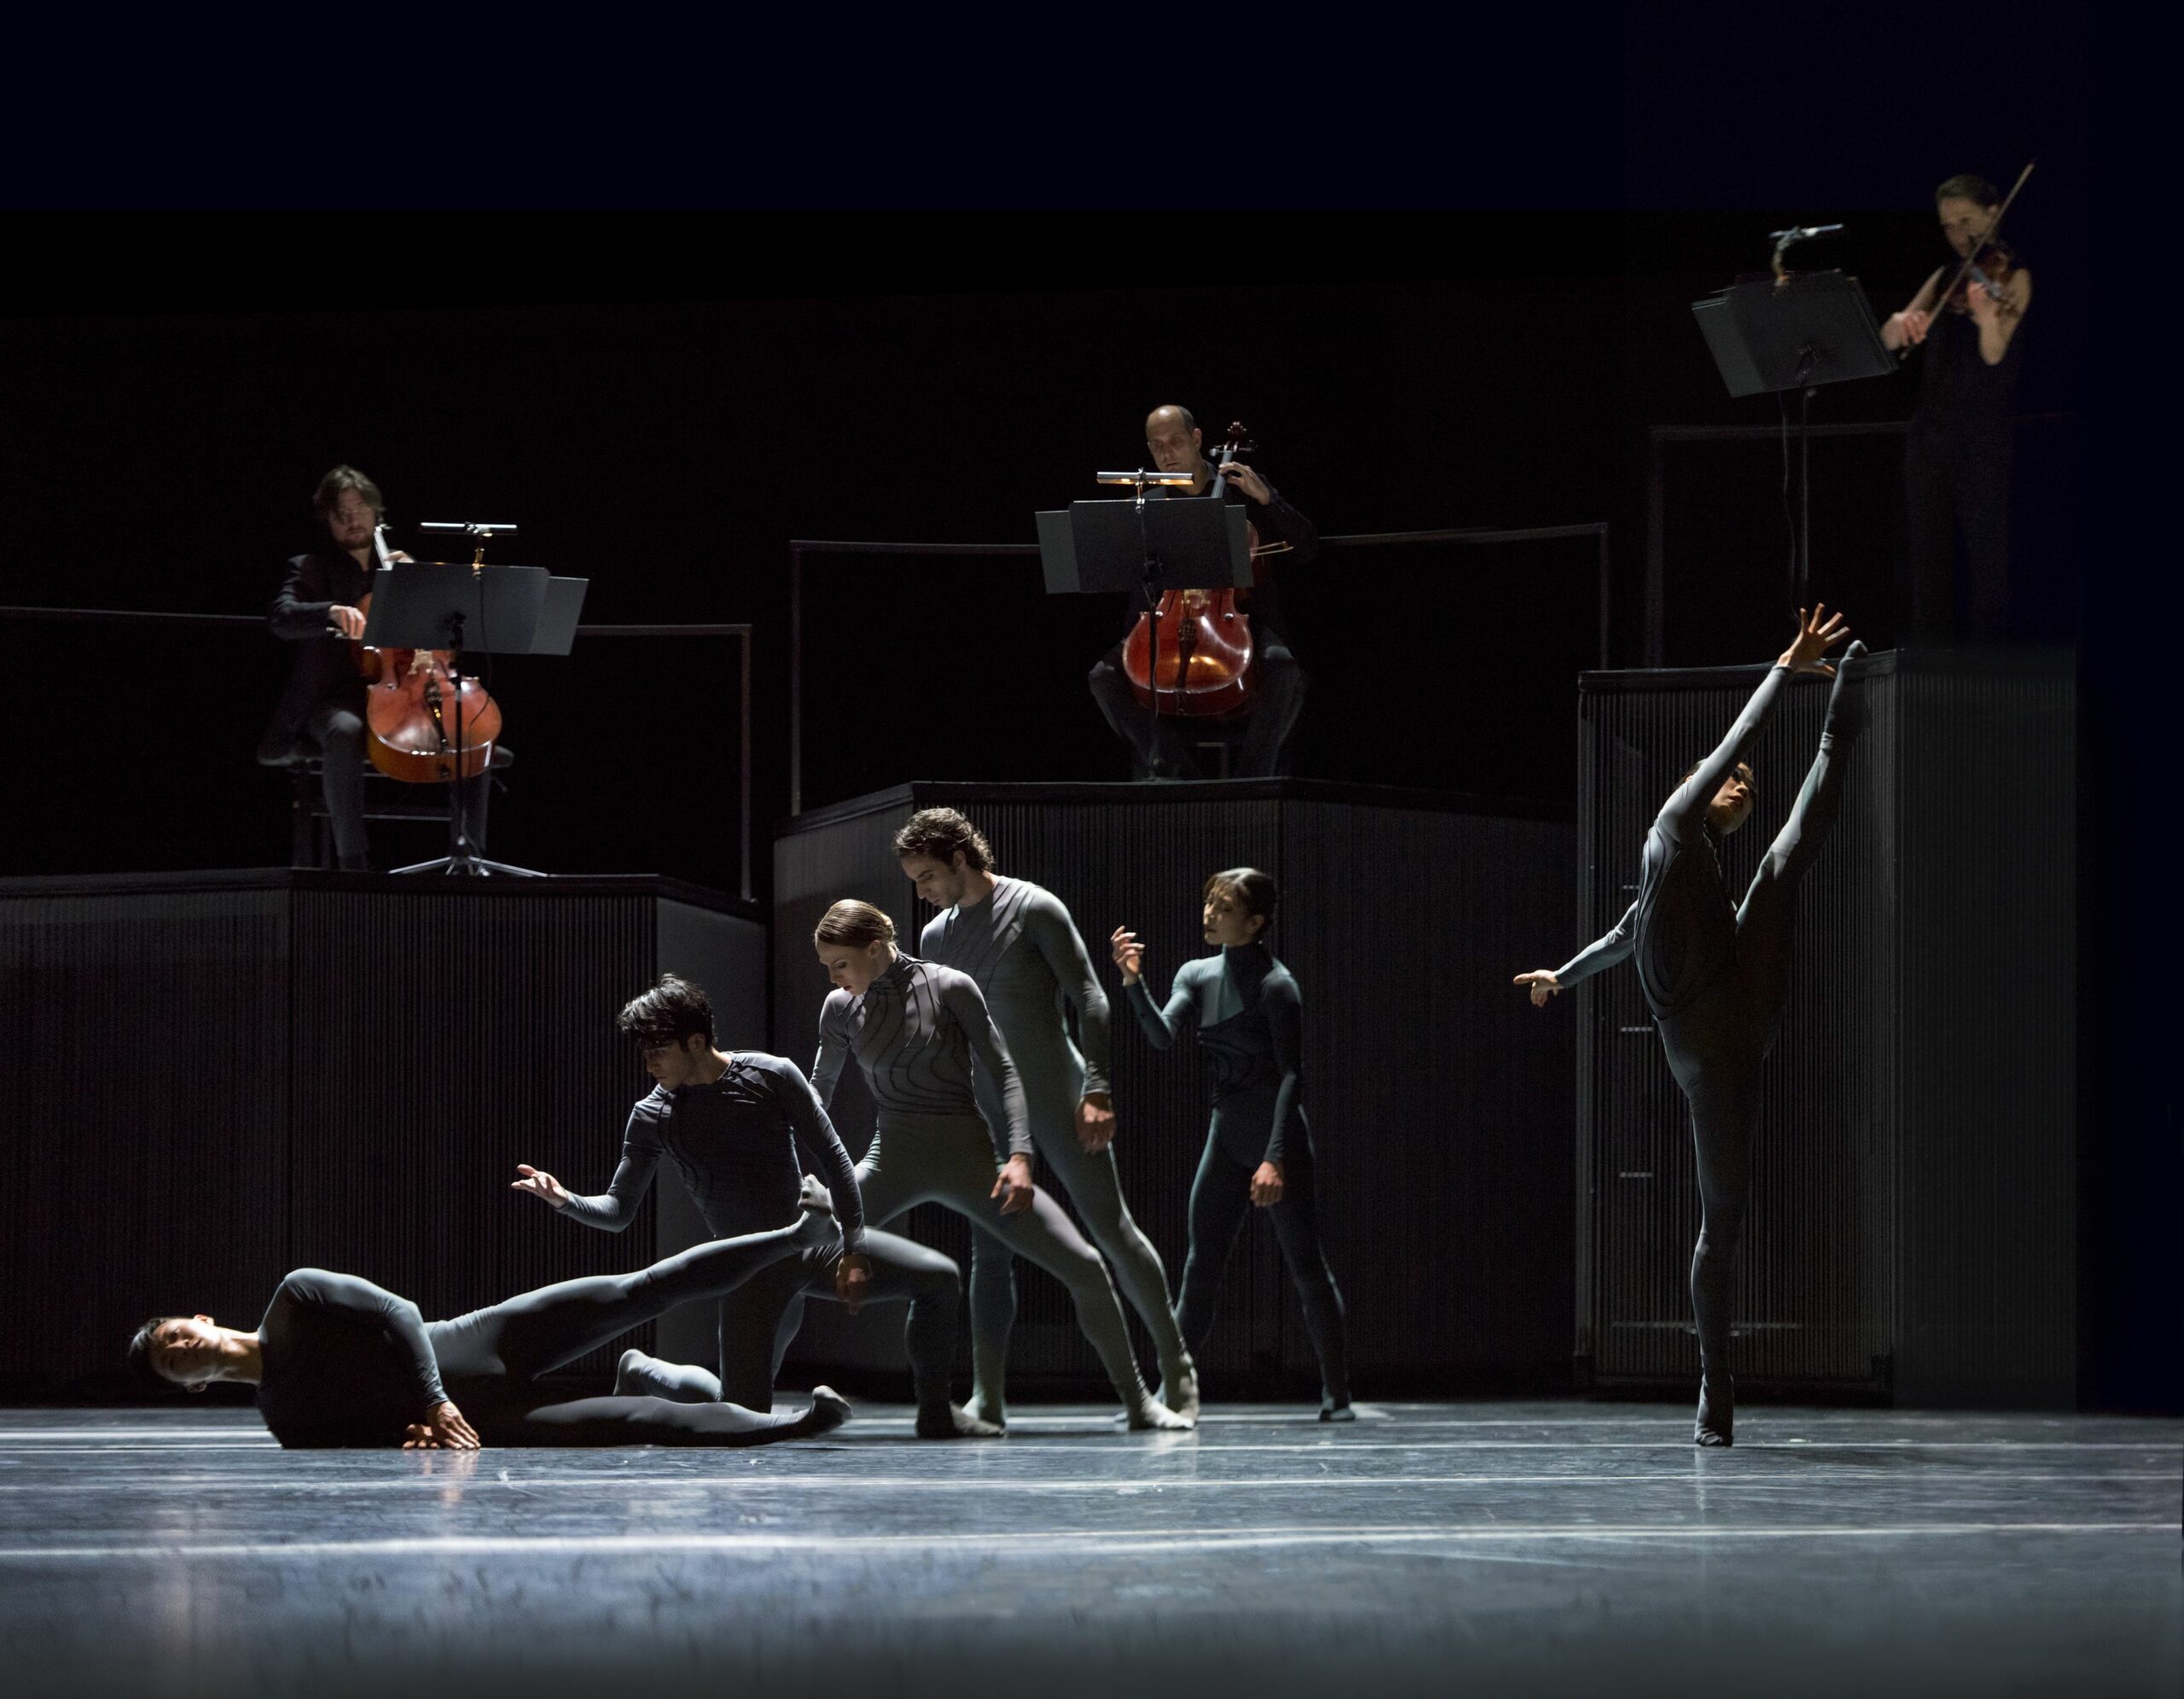 "Four Quartets", Choreographie von Goya Montero. Im Bild: Hiroki Ichinose, Max Levy, Maeva Lassere, Oscar Alonso, Sayaka Kado, Natsu Aasaki und das Apollon Musagète Quartett